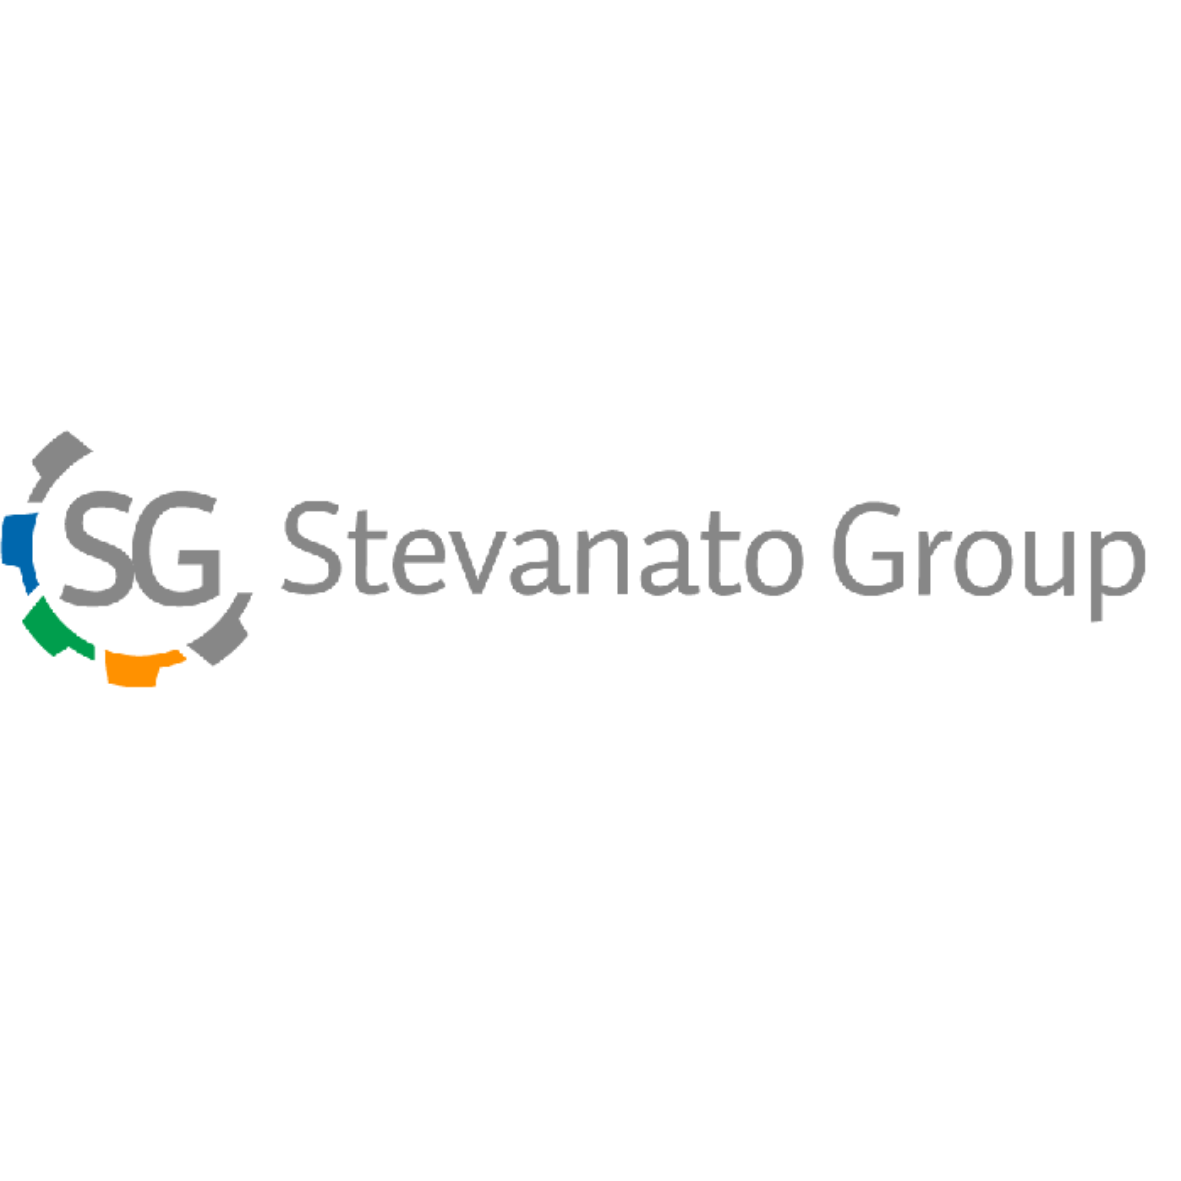 STEVANATO Group